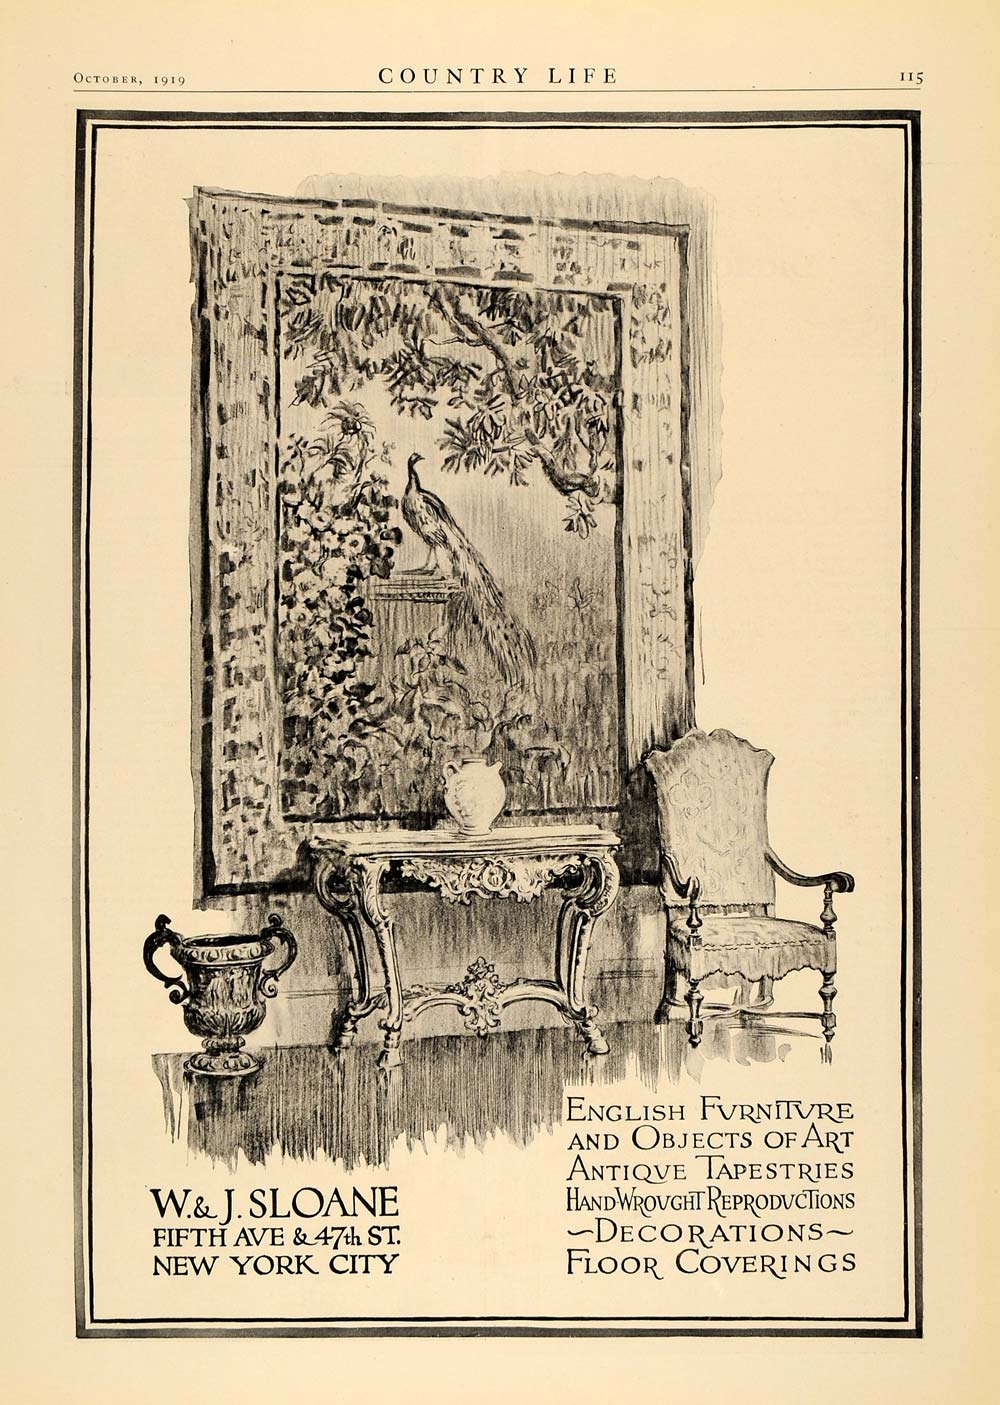 1919 Ad W.J. Sloane English Furniture Antique Tapestry - ORIGINAL CL4